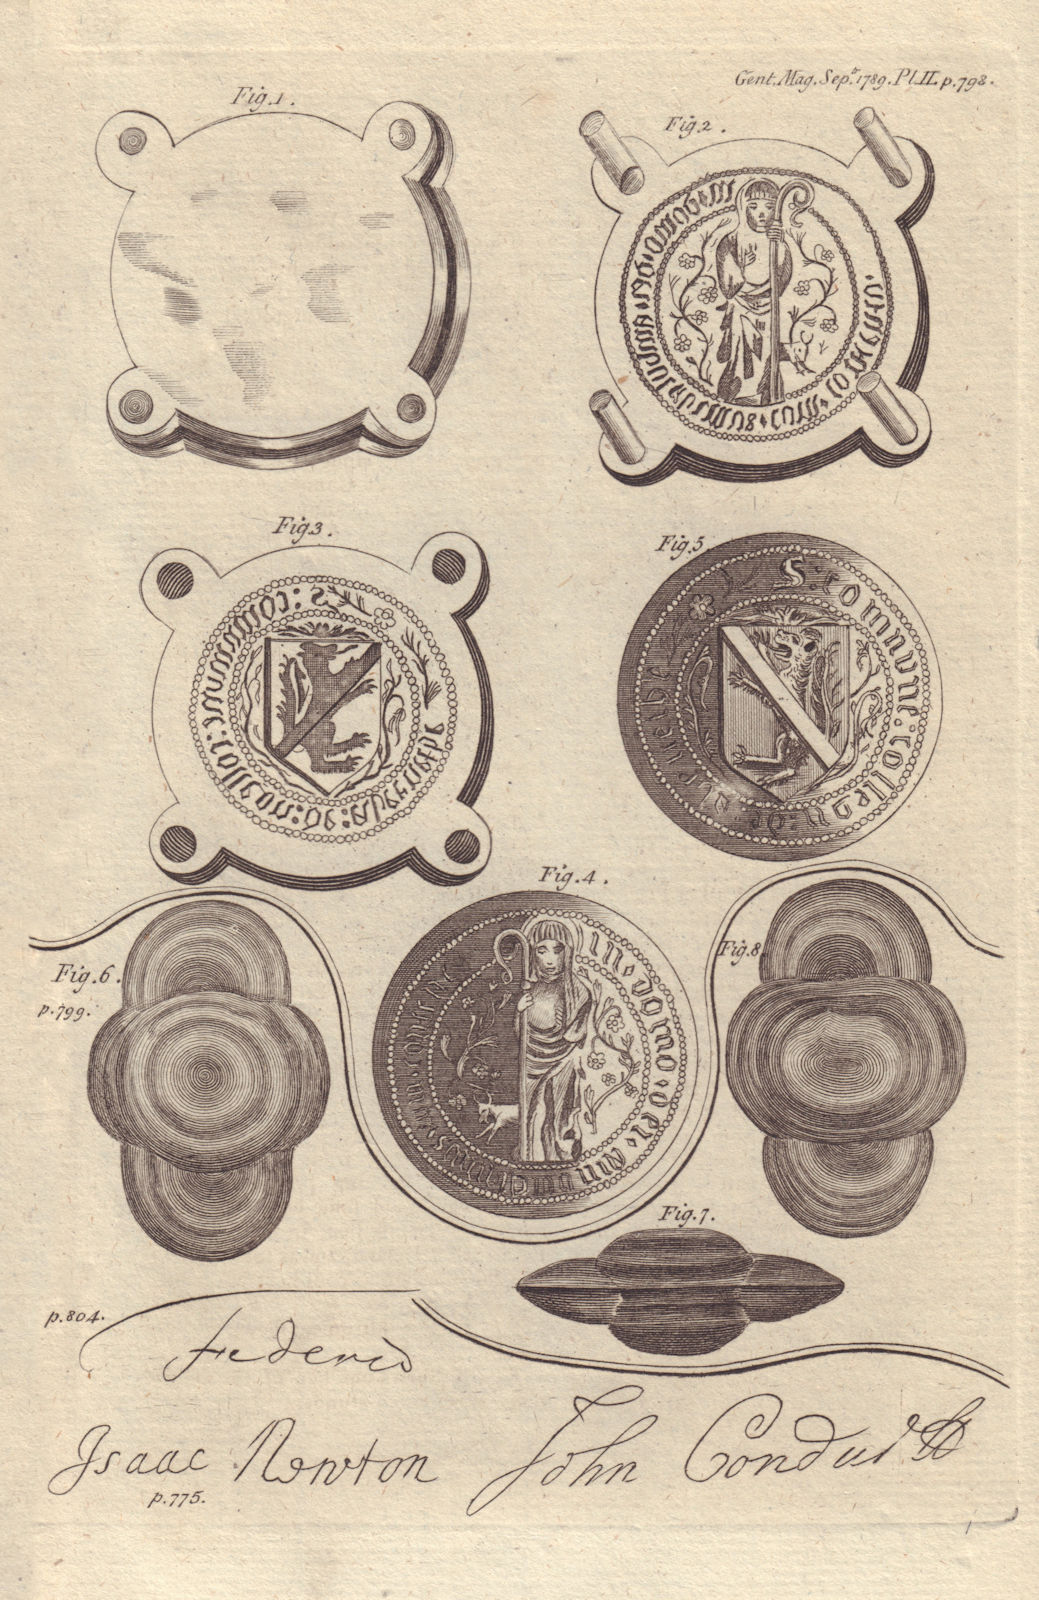 Abernethy College seal. Isaac Newton John Conduitt Frederick III of Prussia 1789